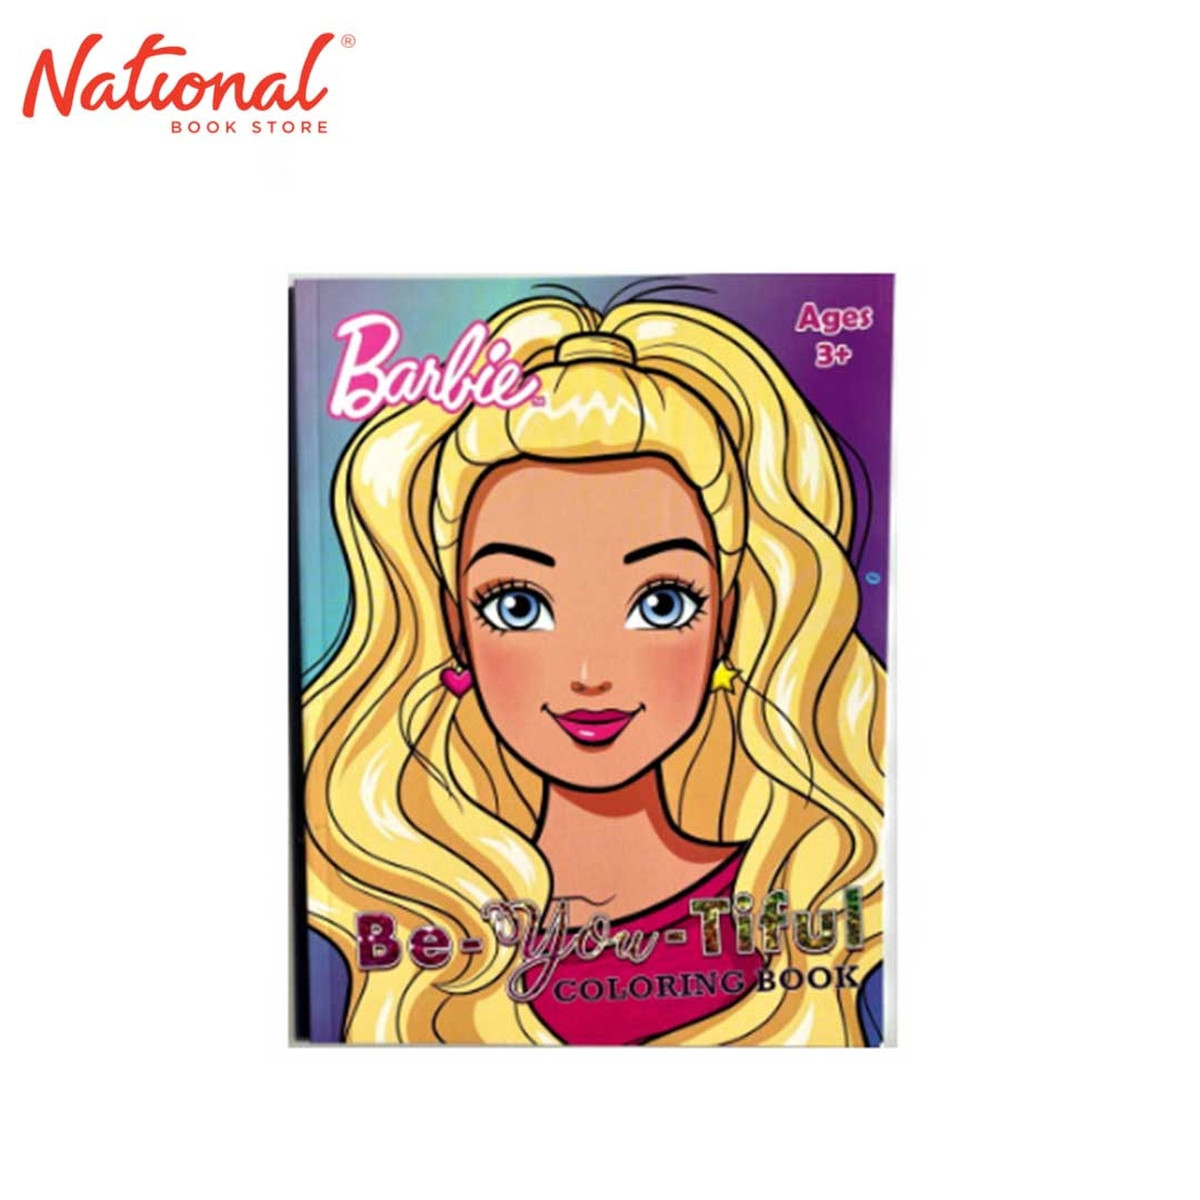 Buy Barbie Colouring Book Online in Dubai & the UAE